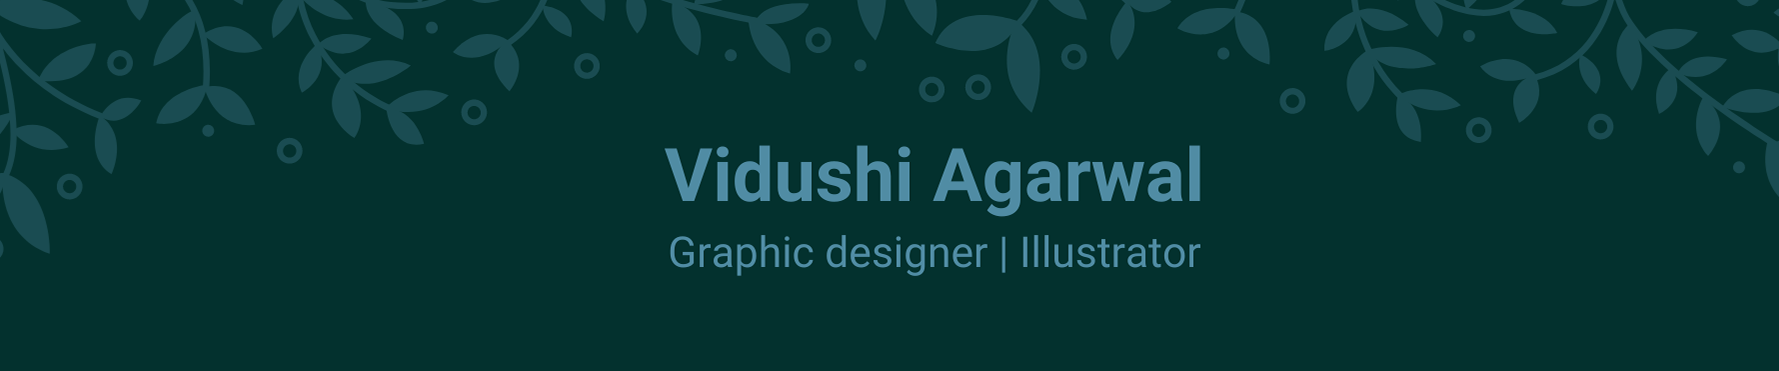 Vidushi Agarwal's profile banner